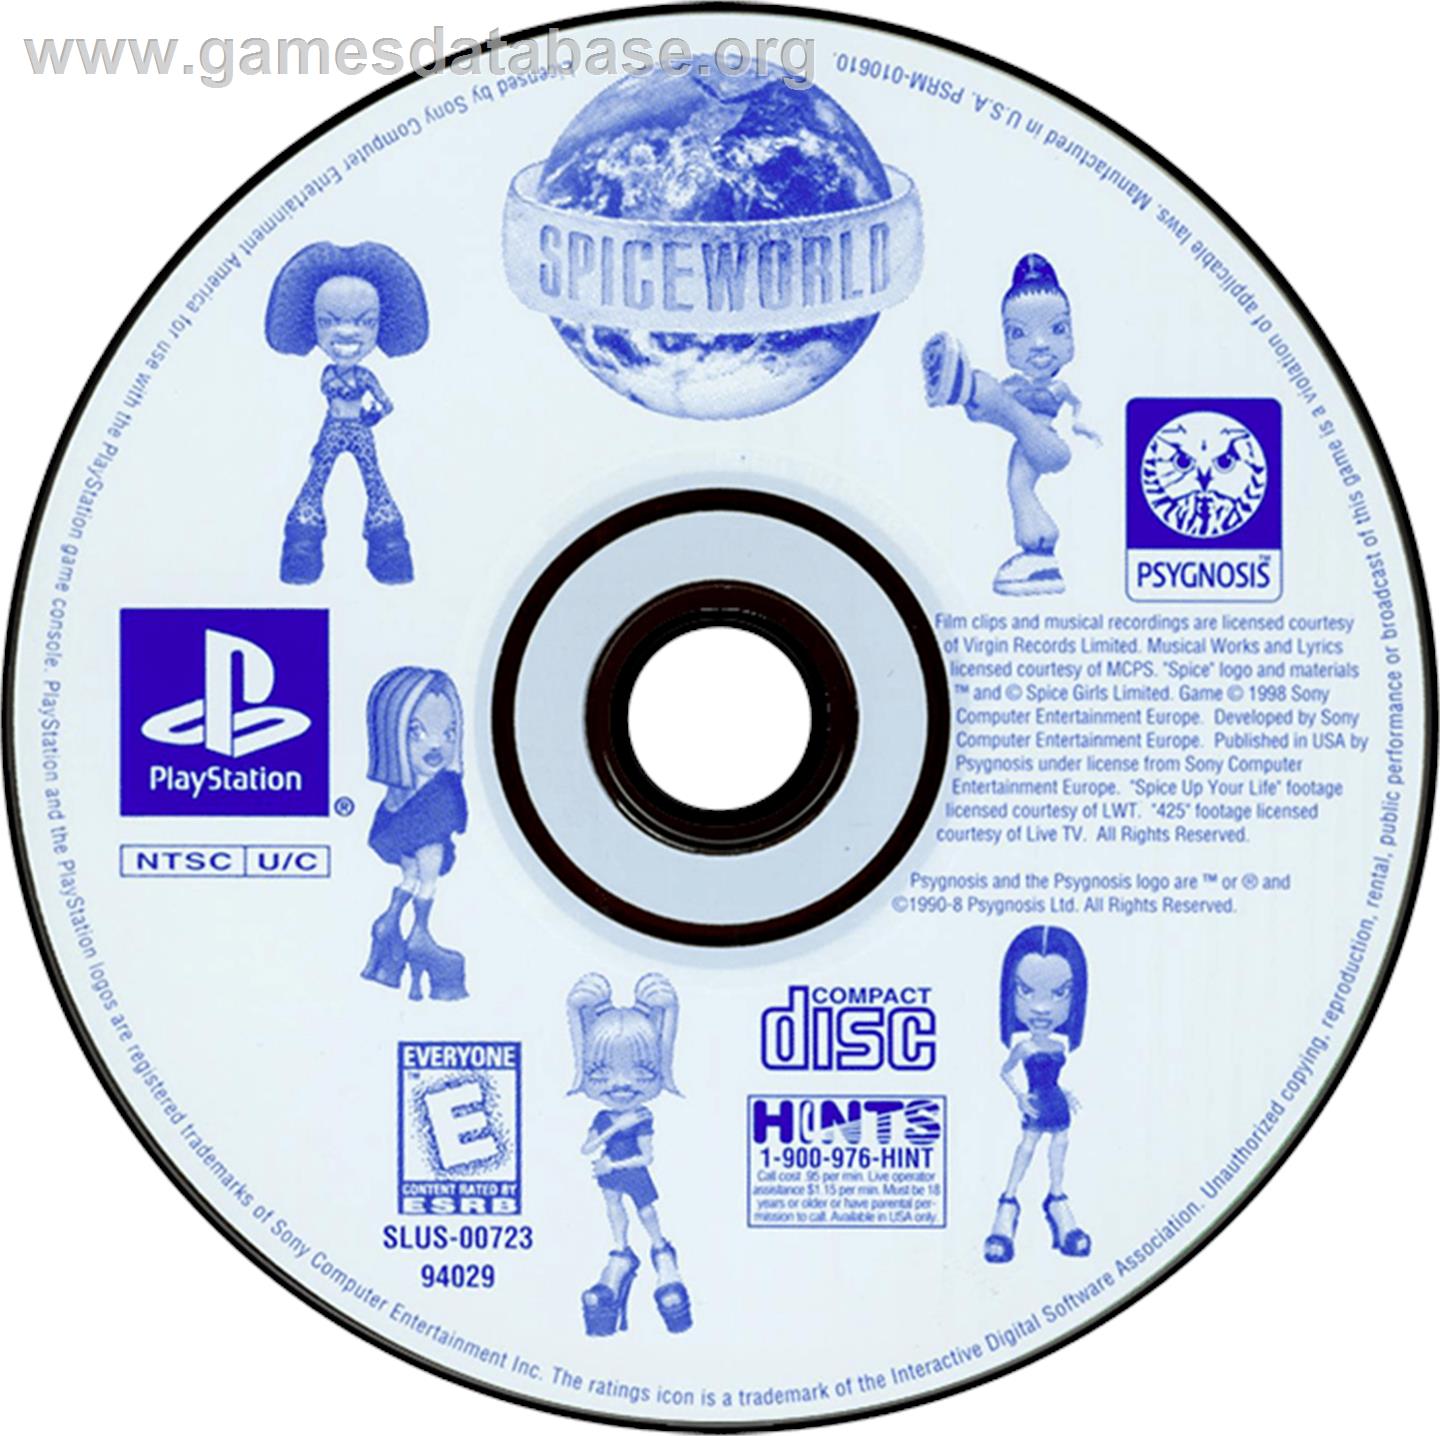 Spice World - Sony Playstation - Artwork - Disc